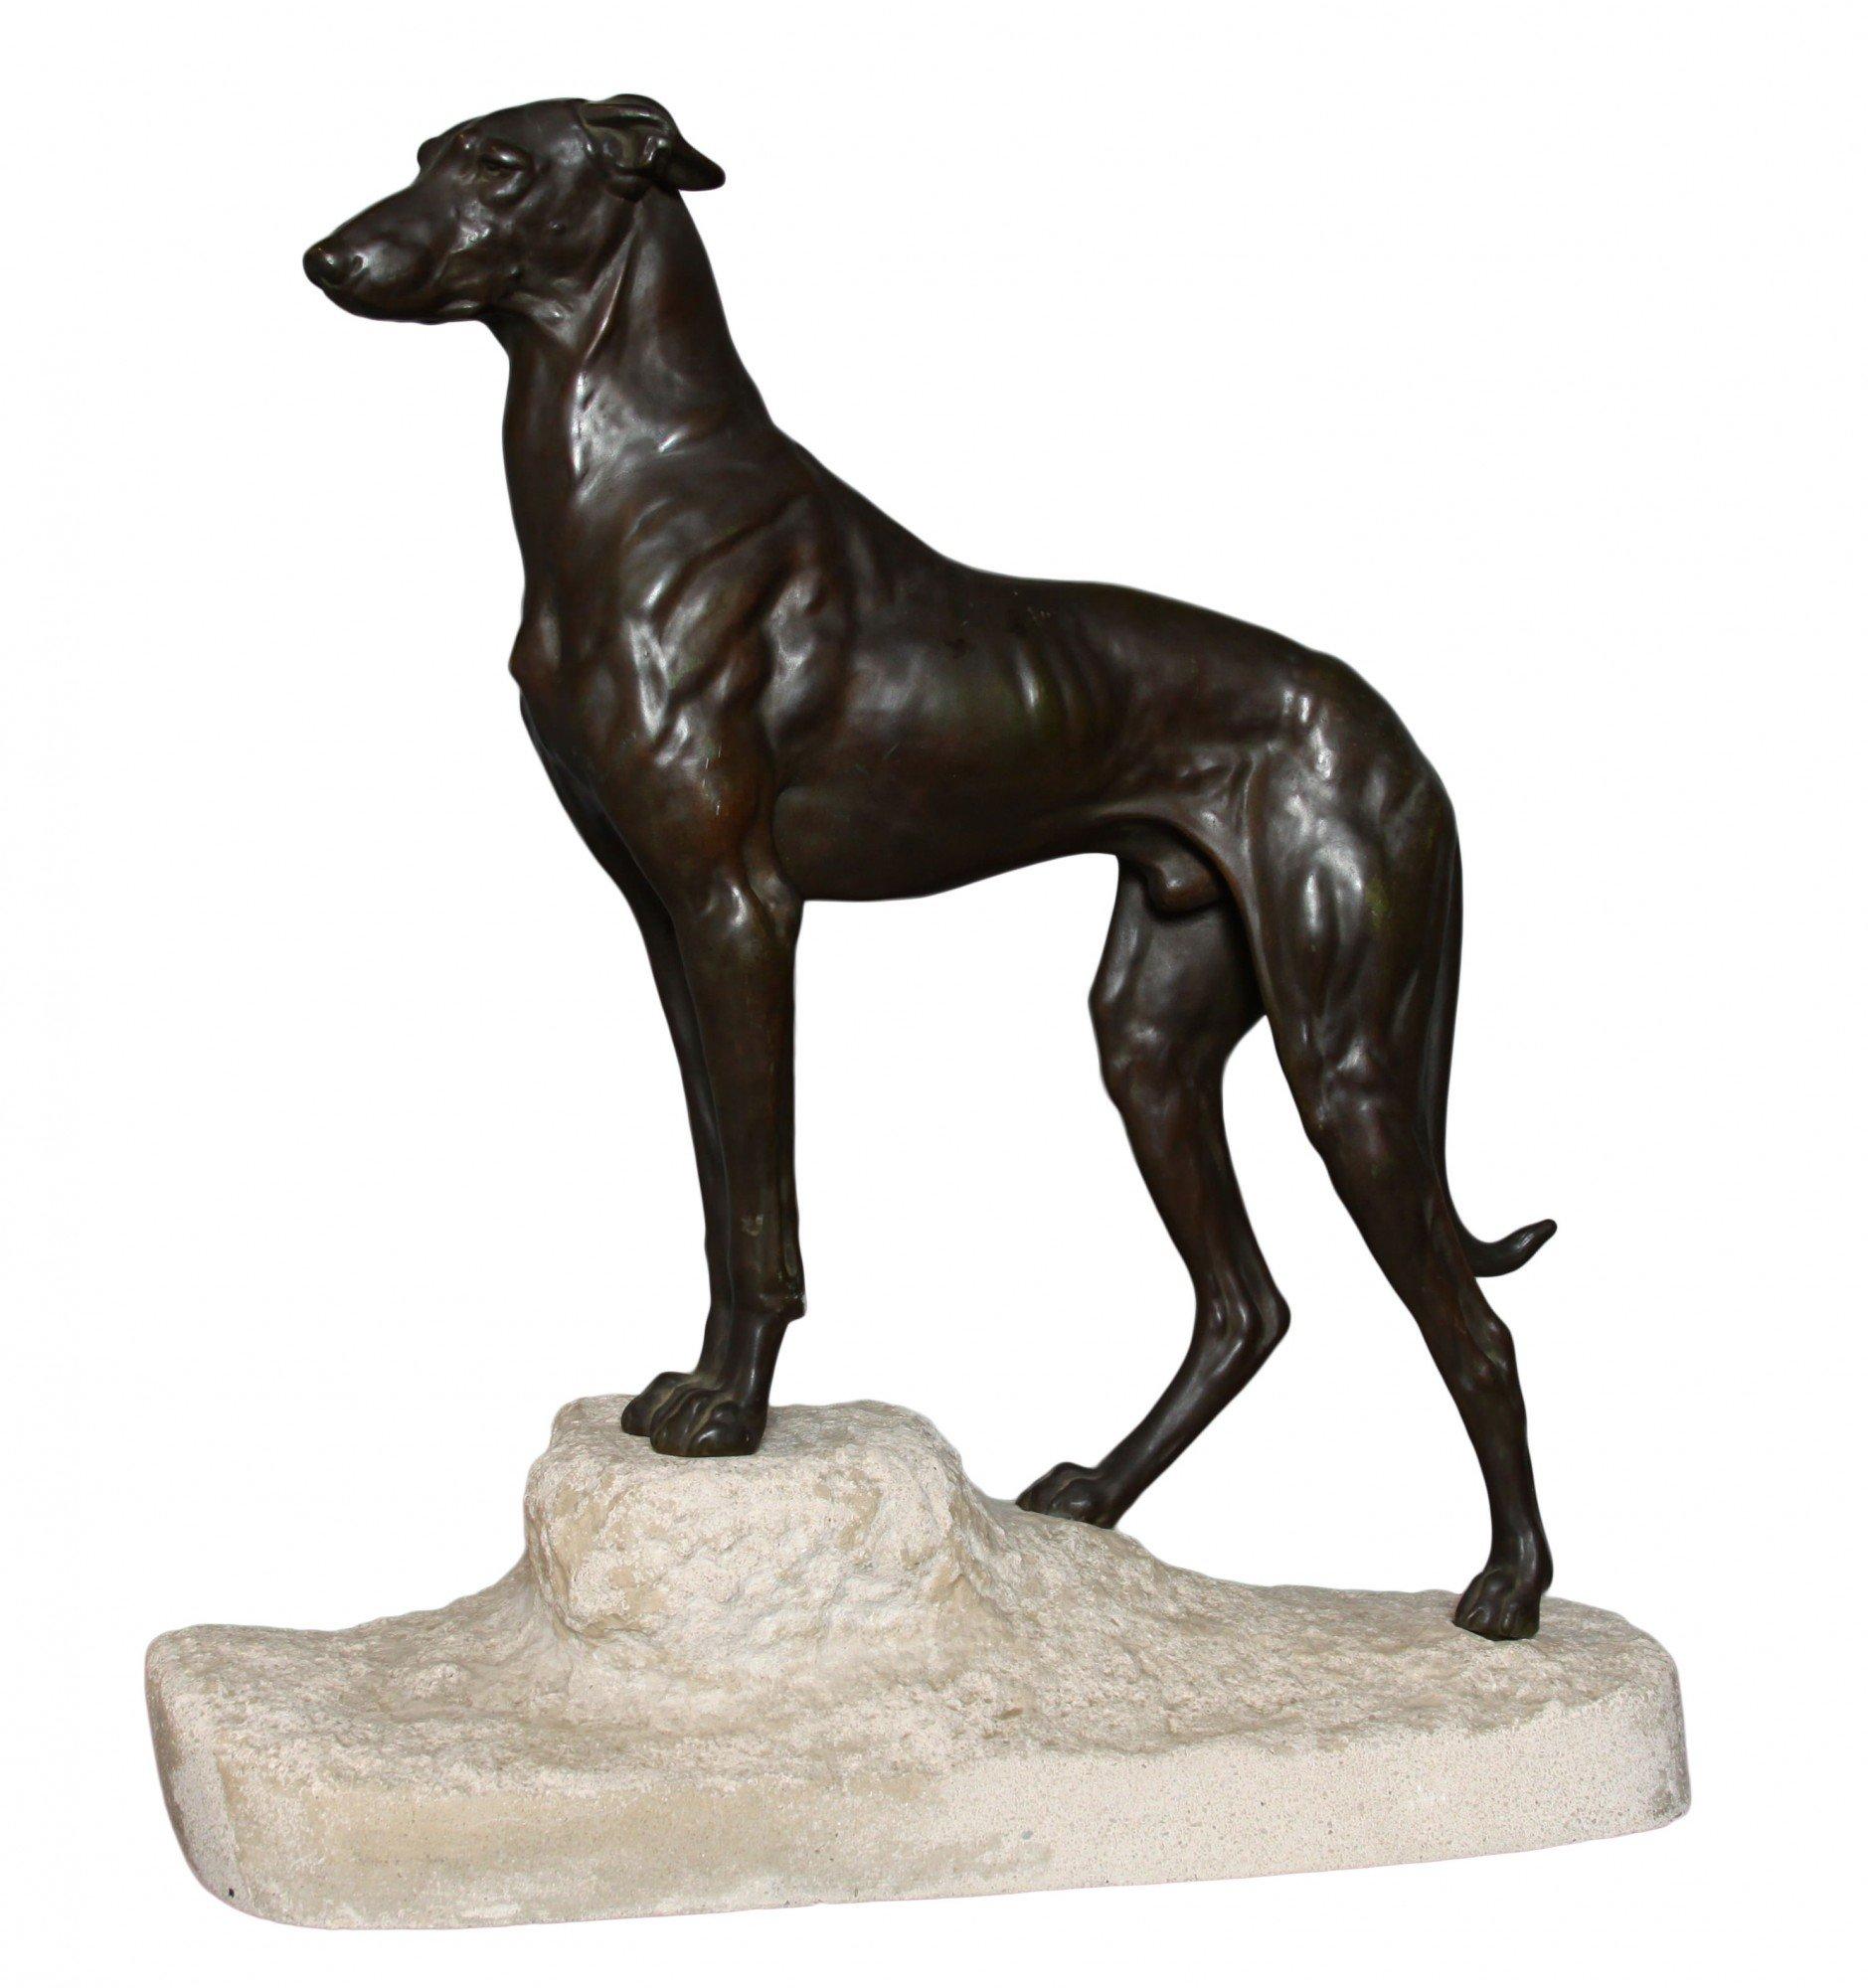 Jules Edmond Masson Figurative Sculpture - 1930 French Bronze Figure of a Lurcher Dog on Stone Base